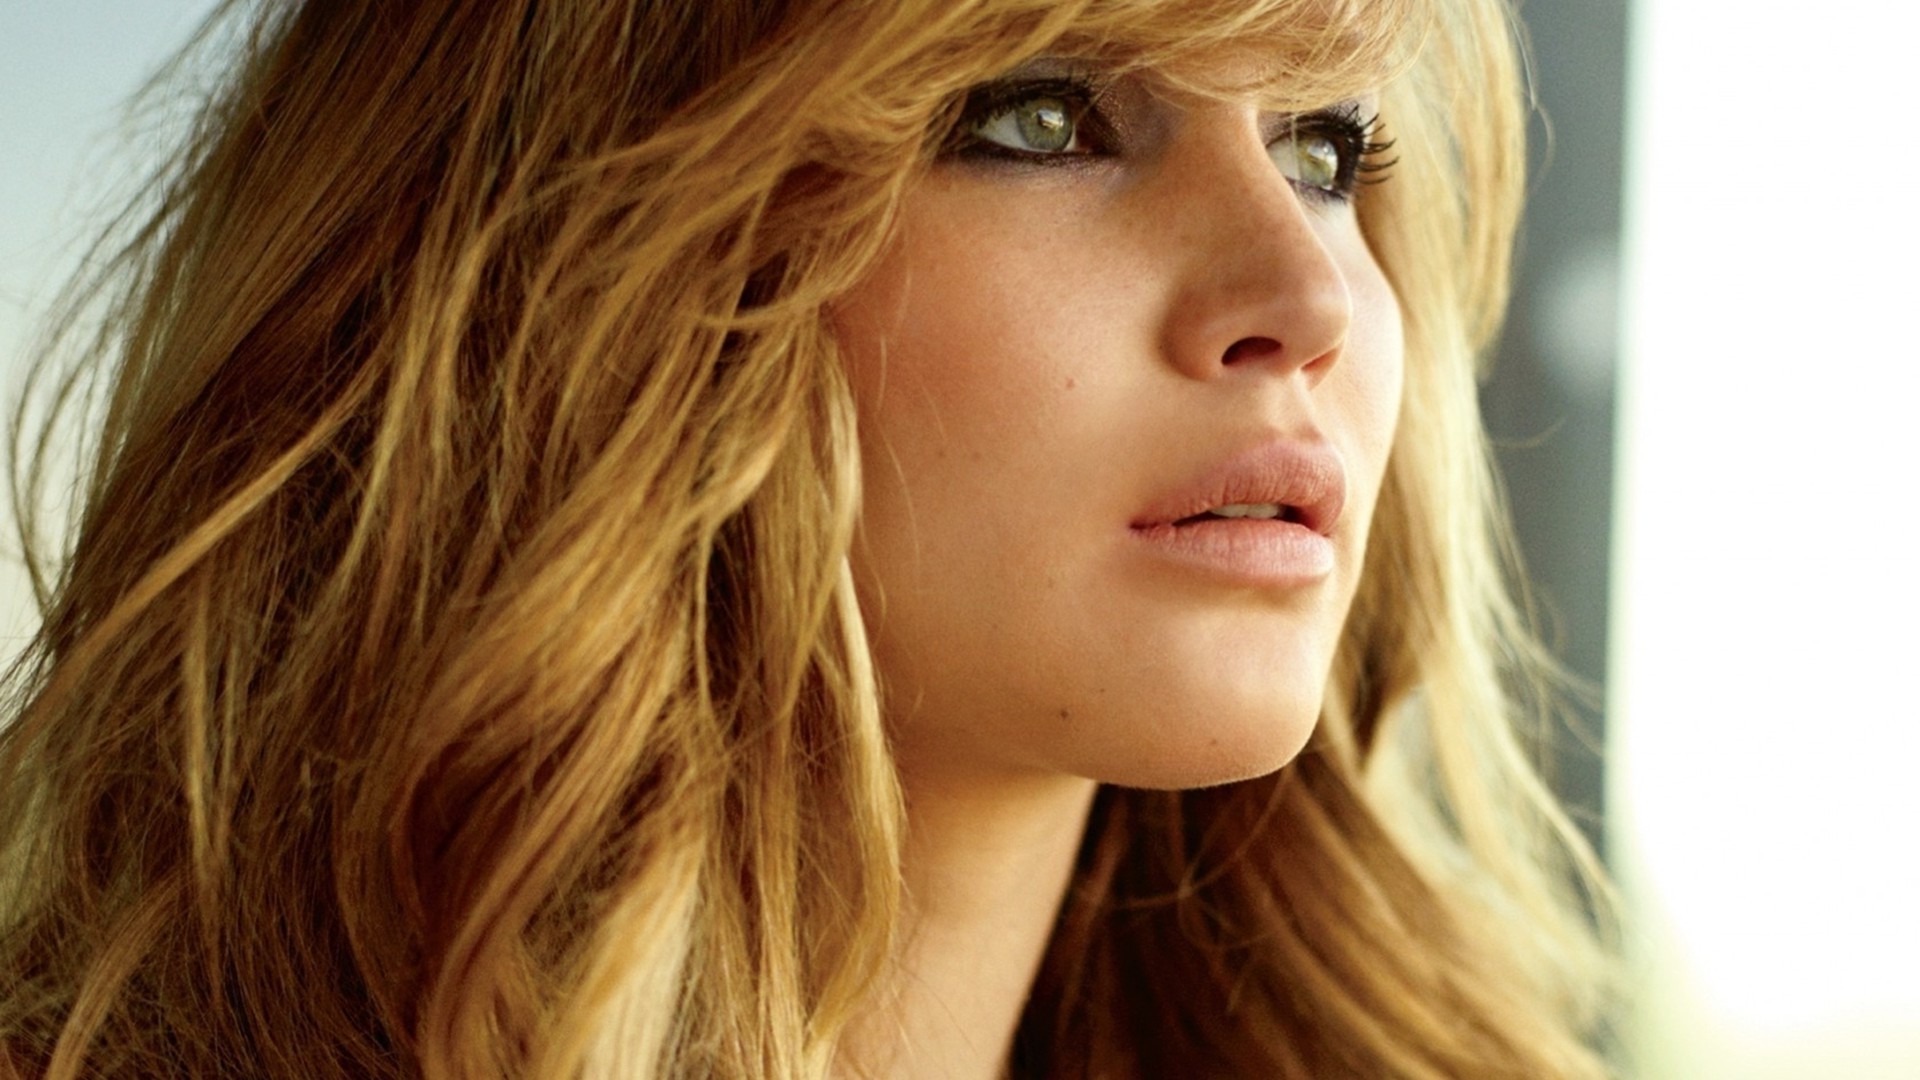 Jennifer Lawrence Green Eyes Hollywood Blonde Women Face Freckles Actress Celebrity 1920x1080